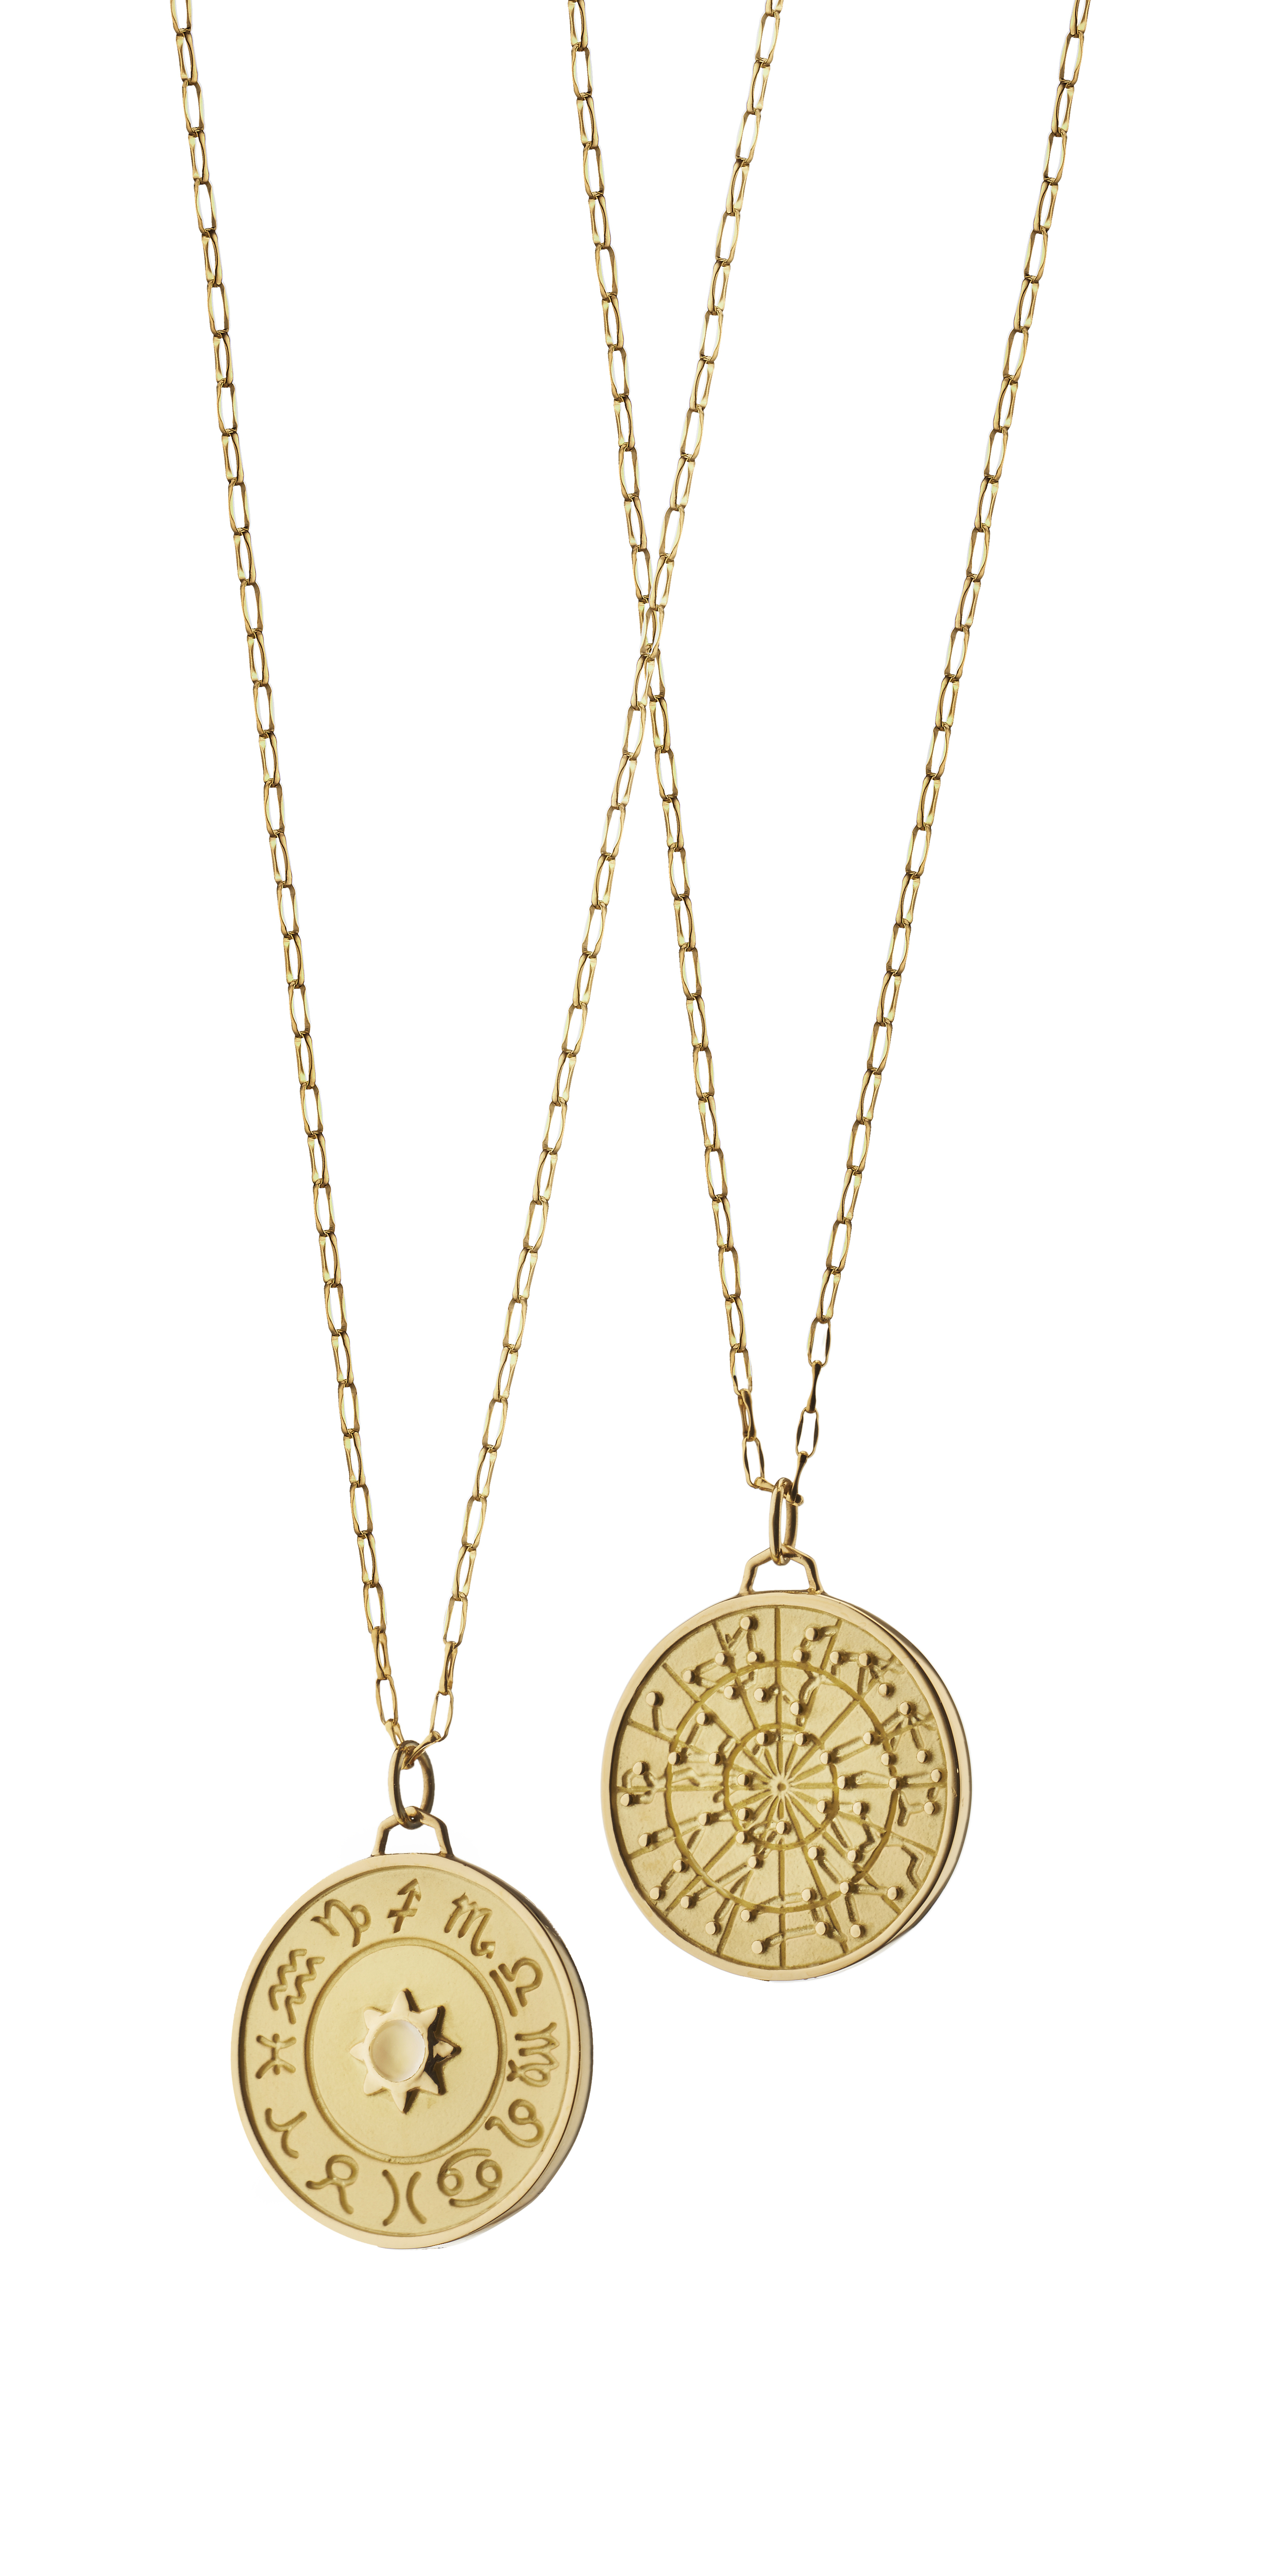  More newness -- Zodiac pendants in 18k yellow gold.&nbsp; 